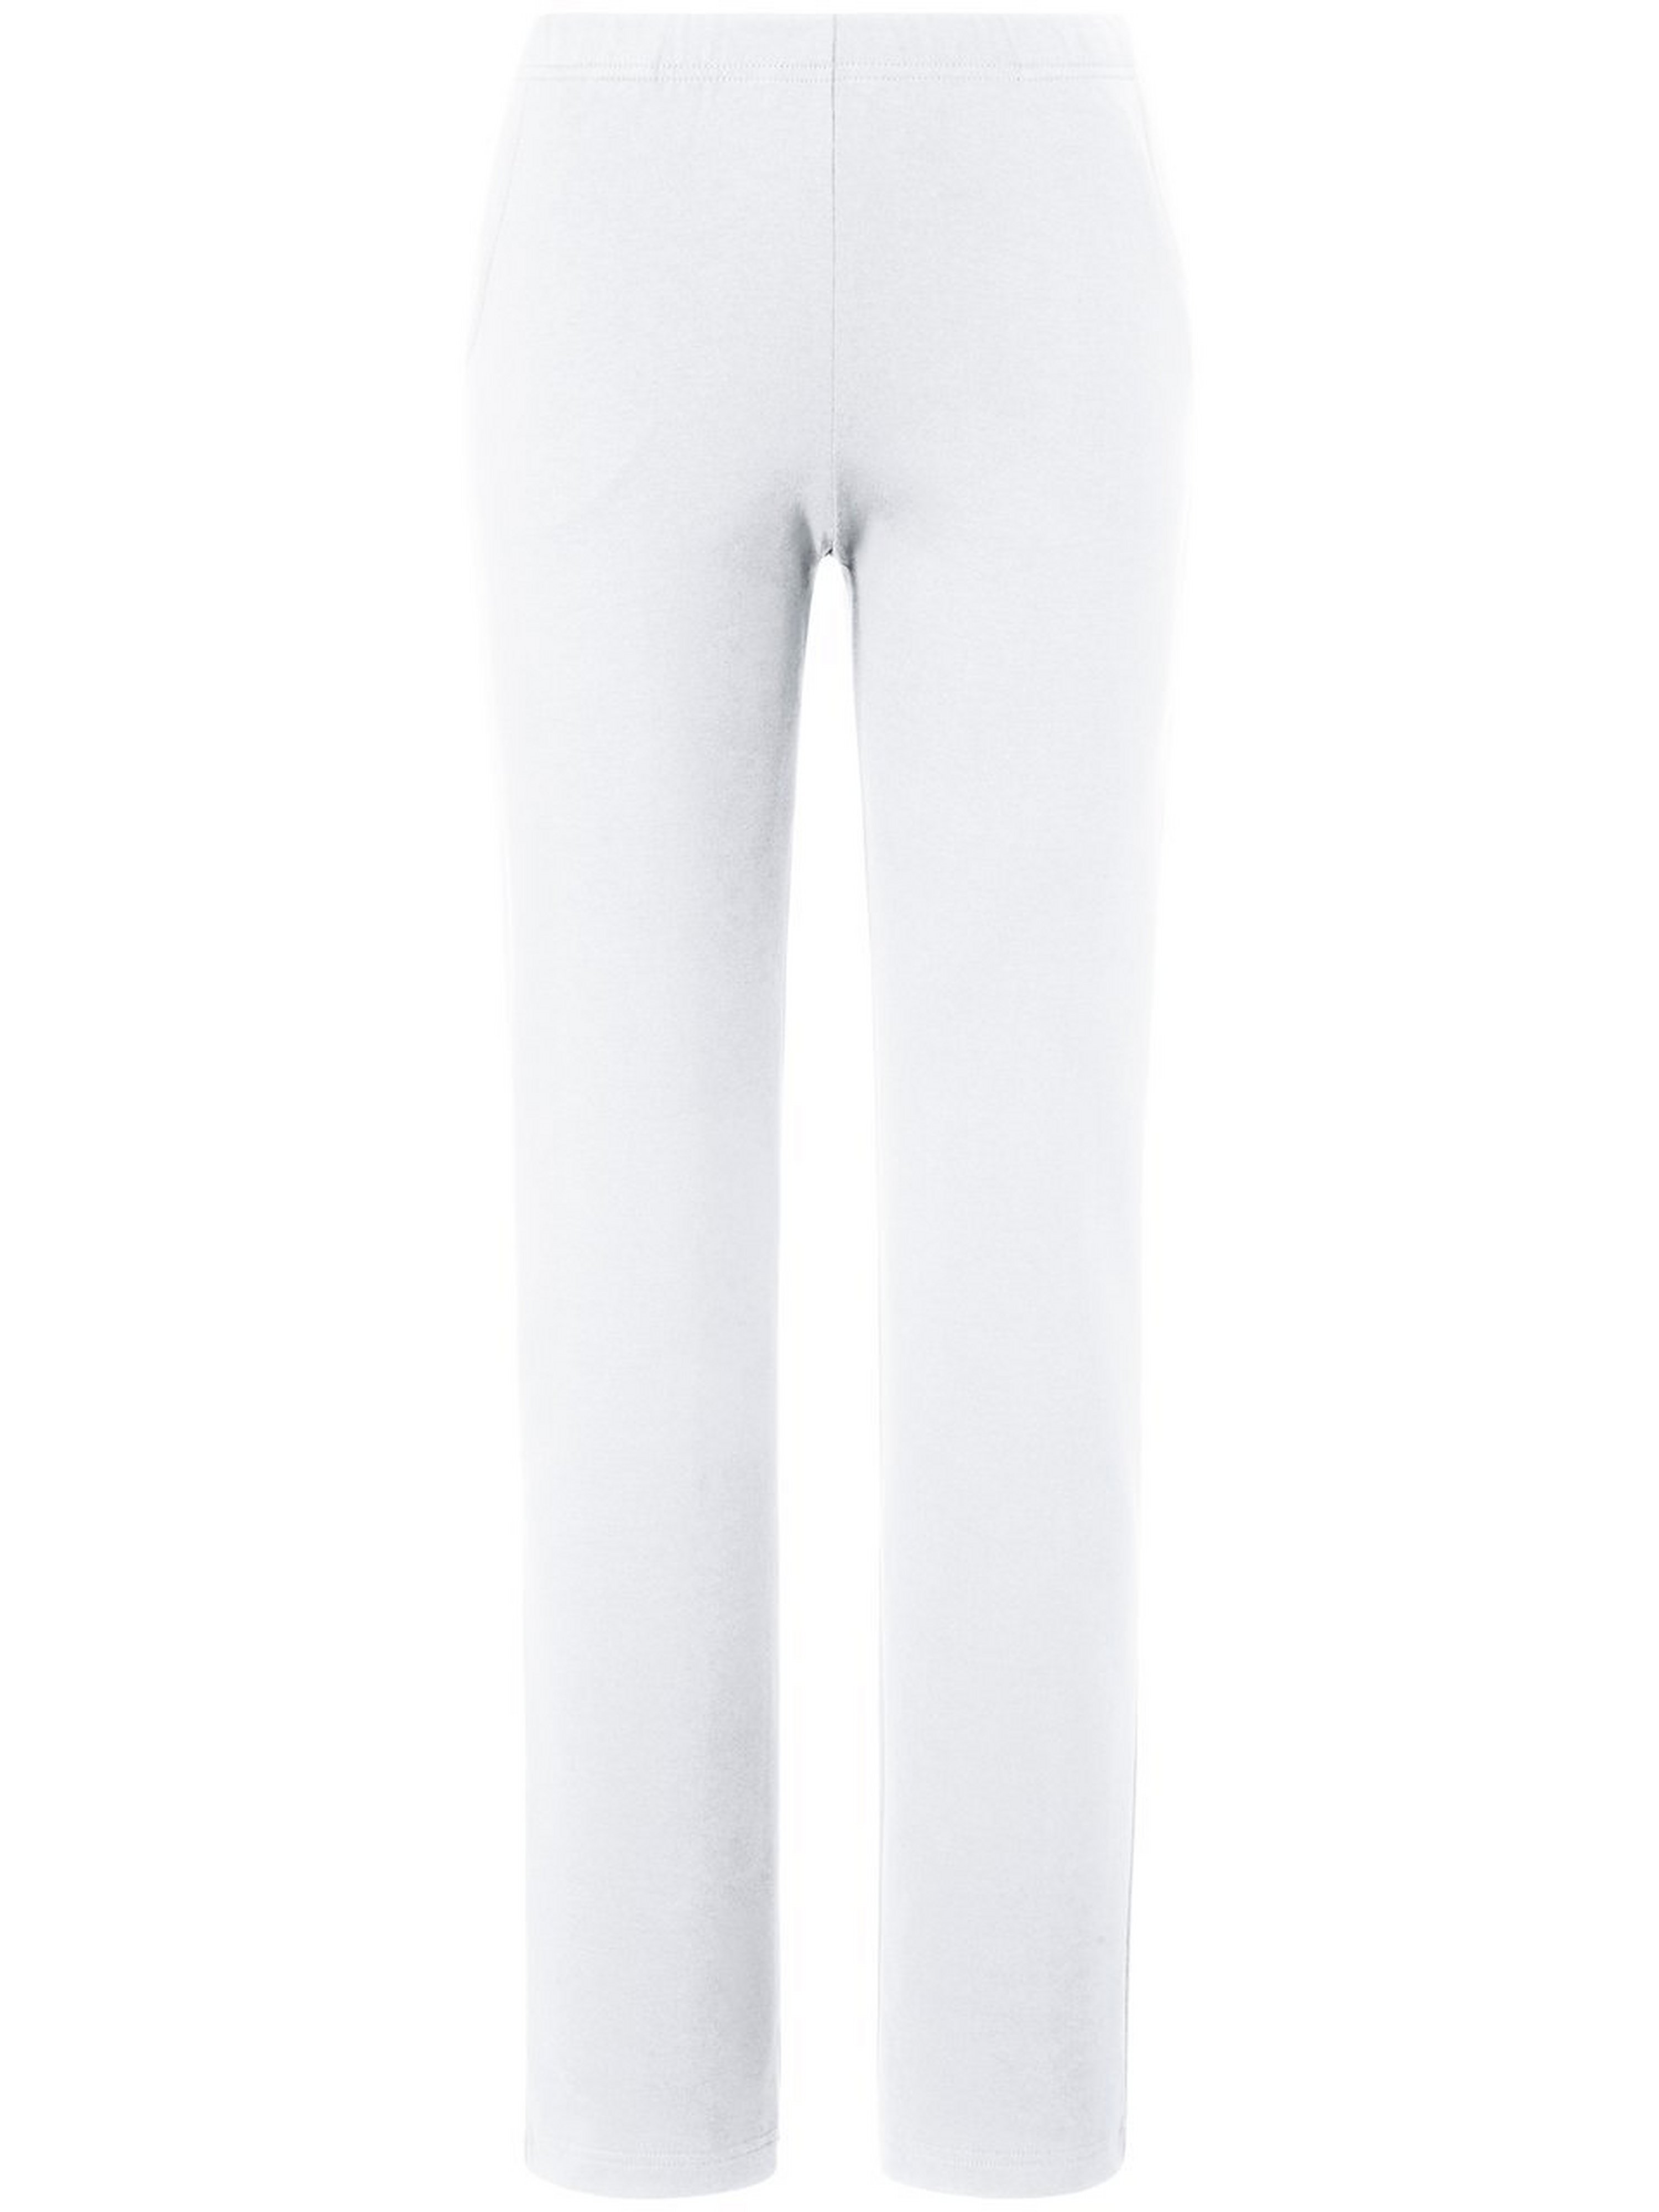 Le pantalon loisirs 100% coton bio  Peter Hahn blanc